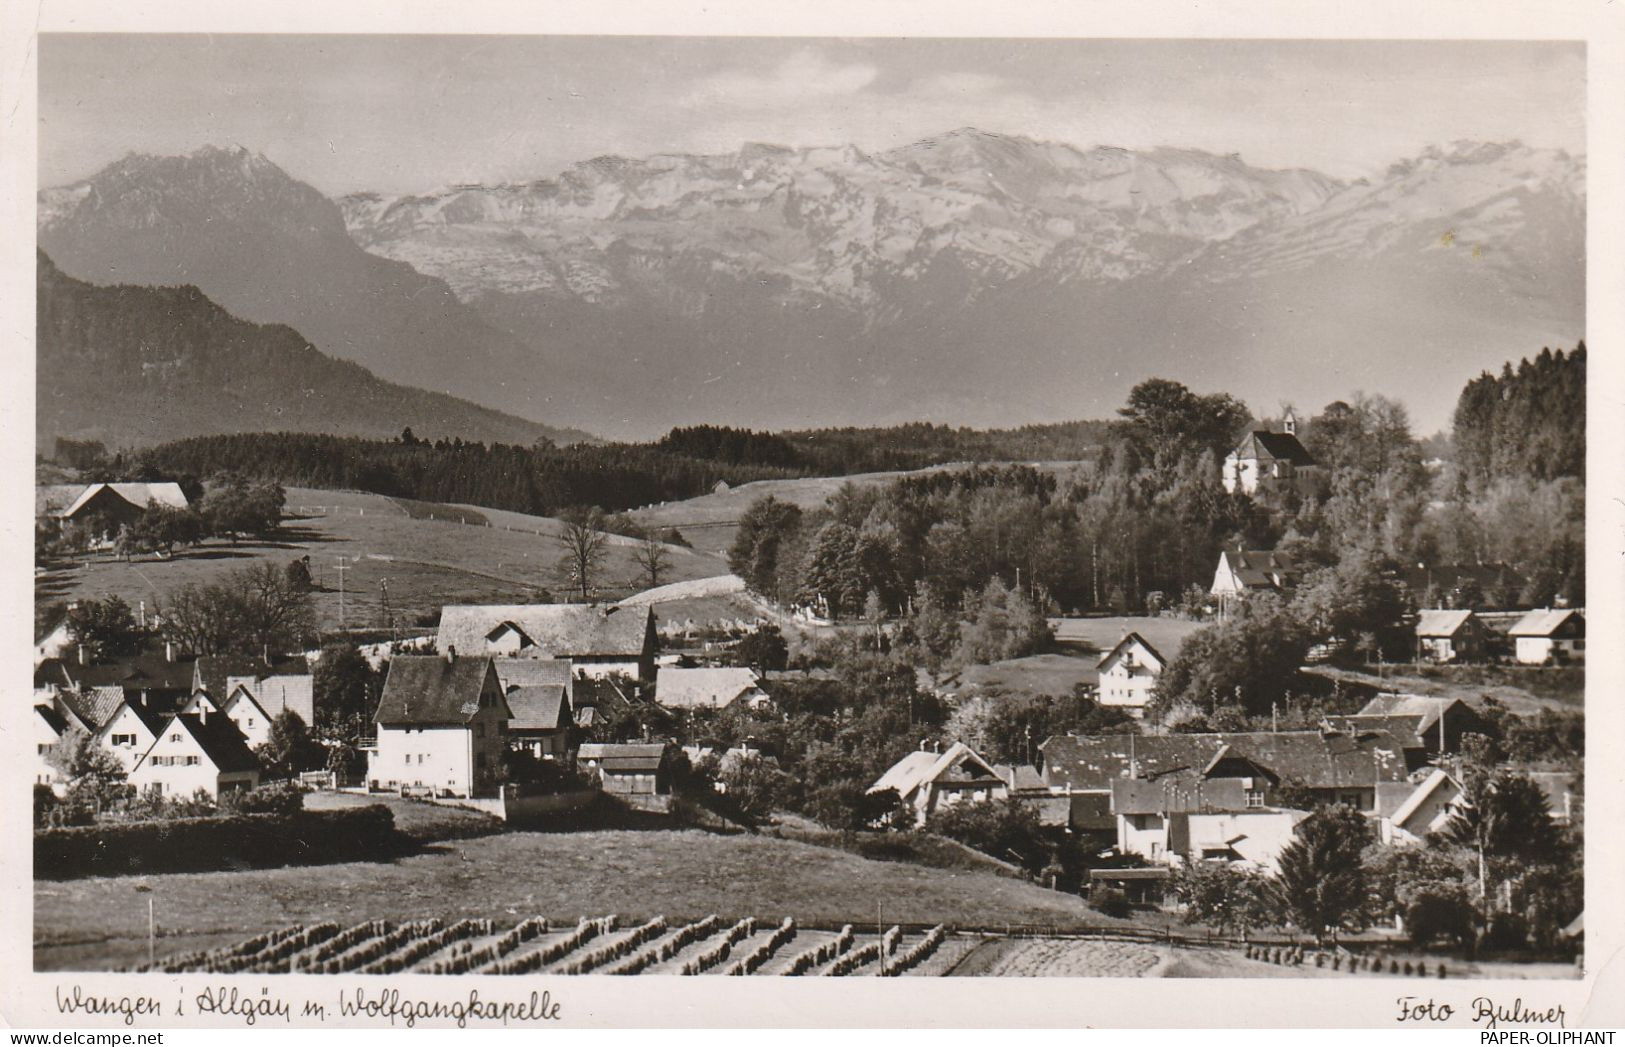 7988 WANGEN, Blick über Den Ort Auf Die Wolfgangkapelle, 1952 - Wangen I. Allg.